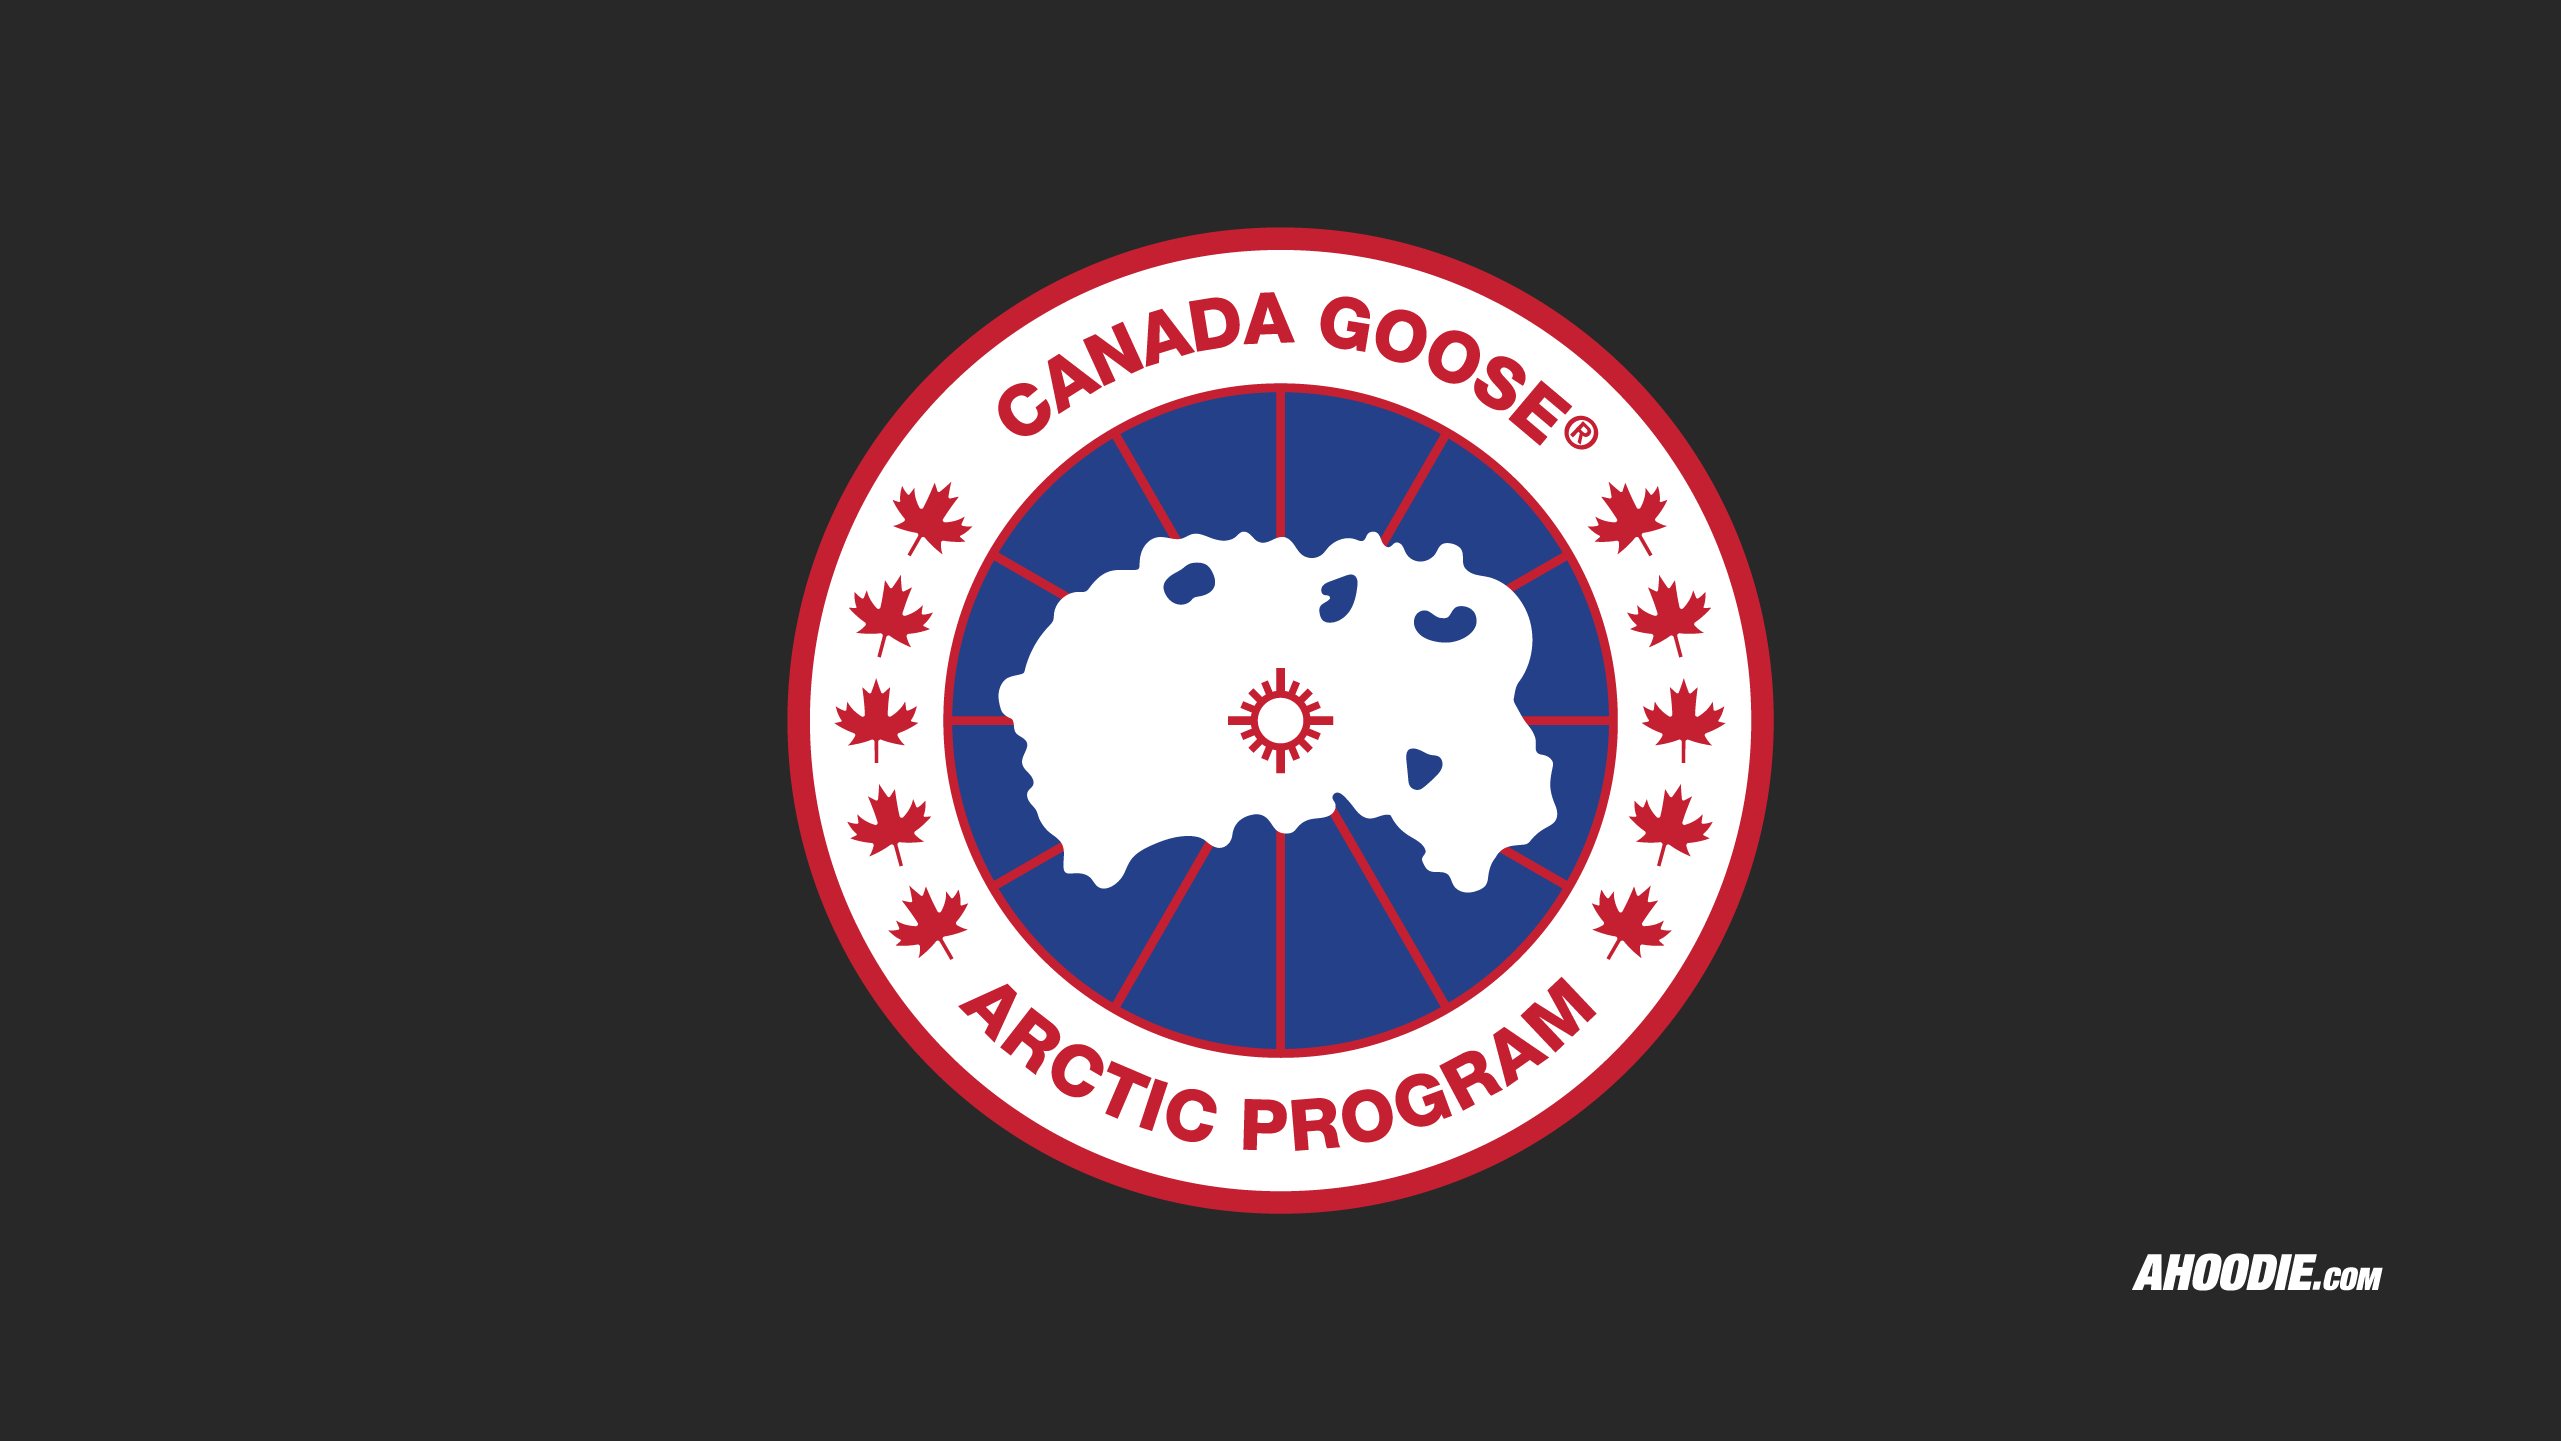 Canada Goose logo wallpaper in charcoal